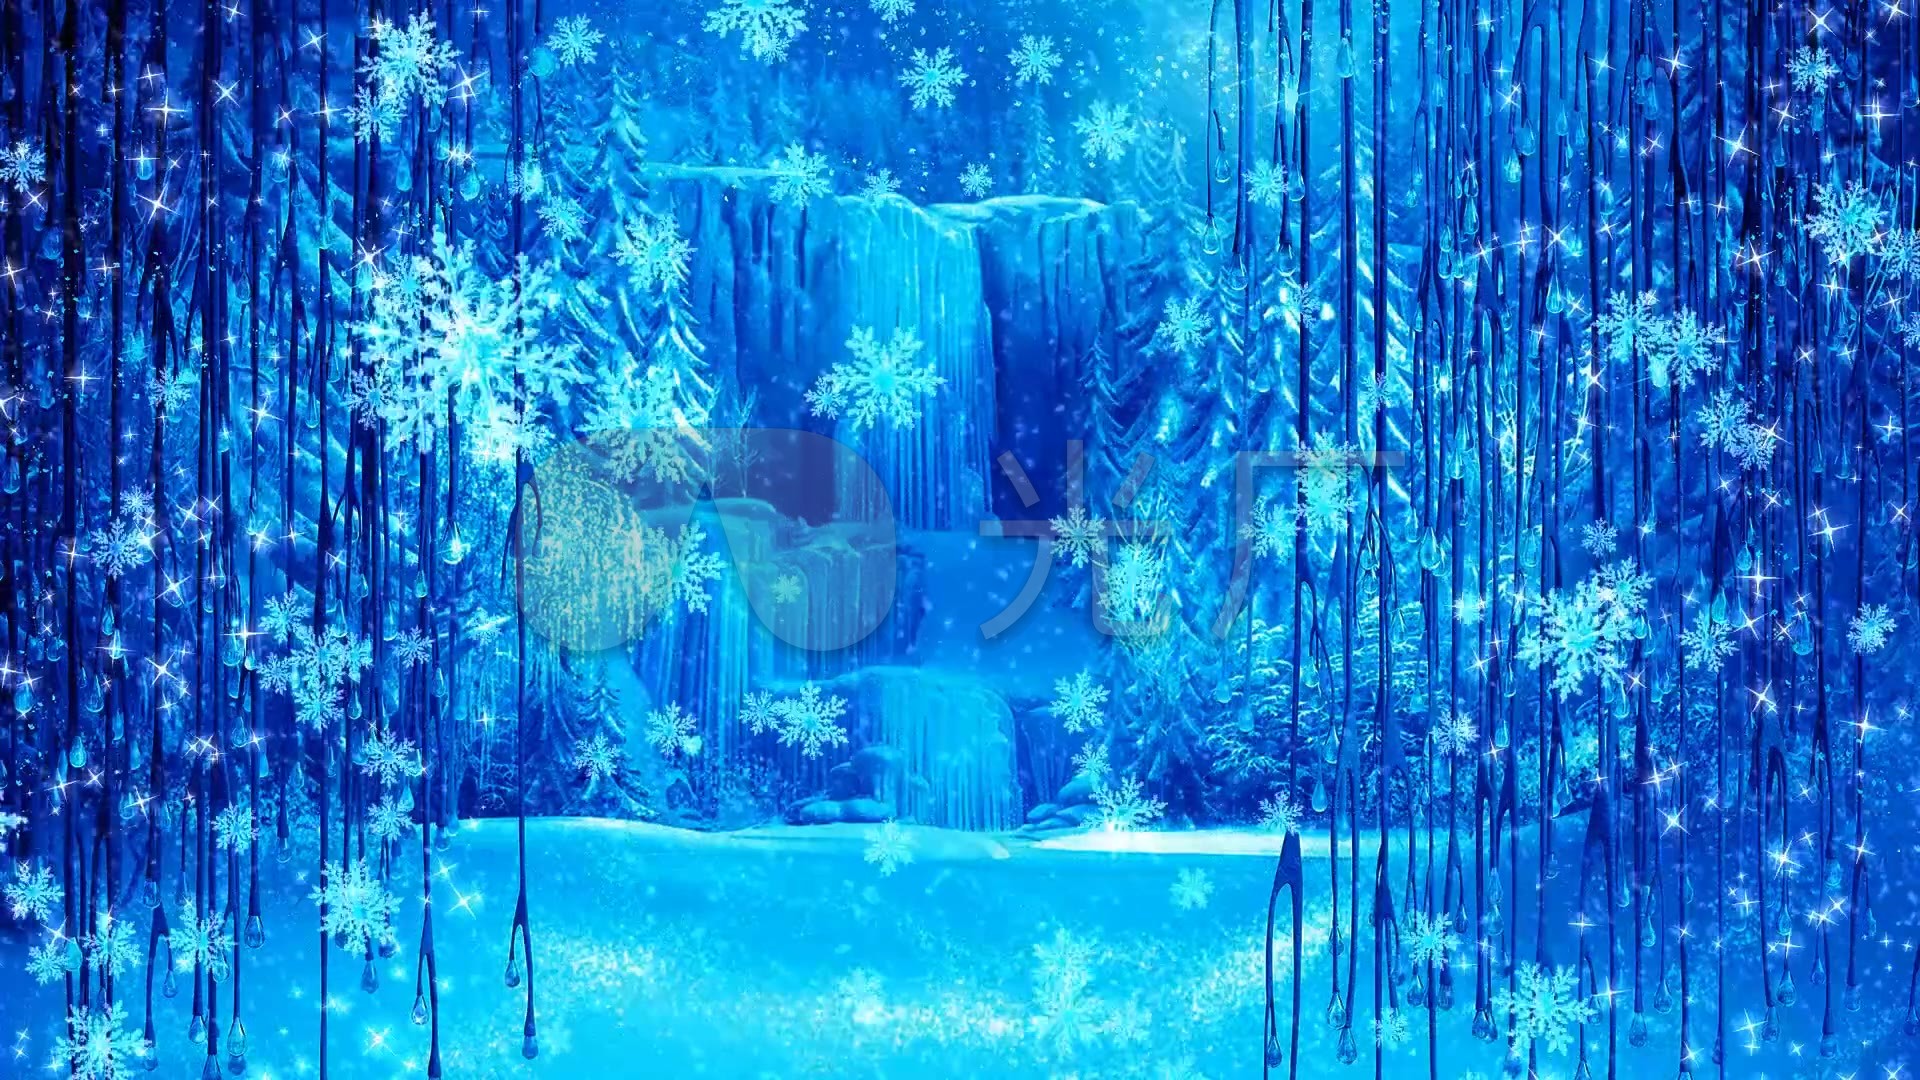 Disney Frozen Wallpaper for Tablets - WallpaperSafari